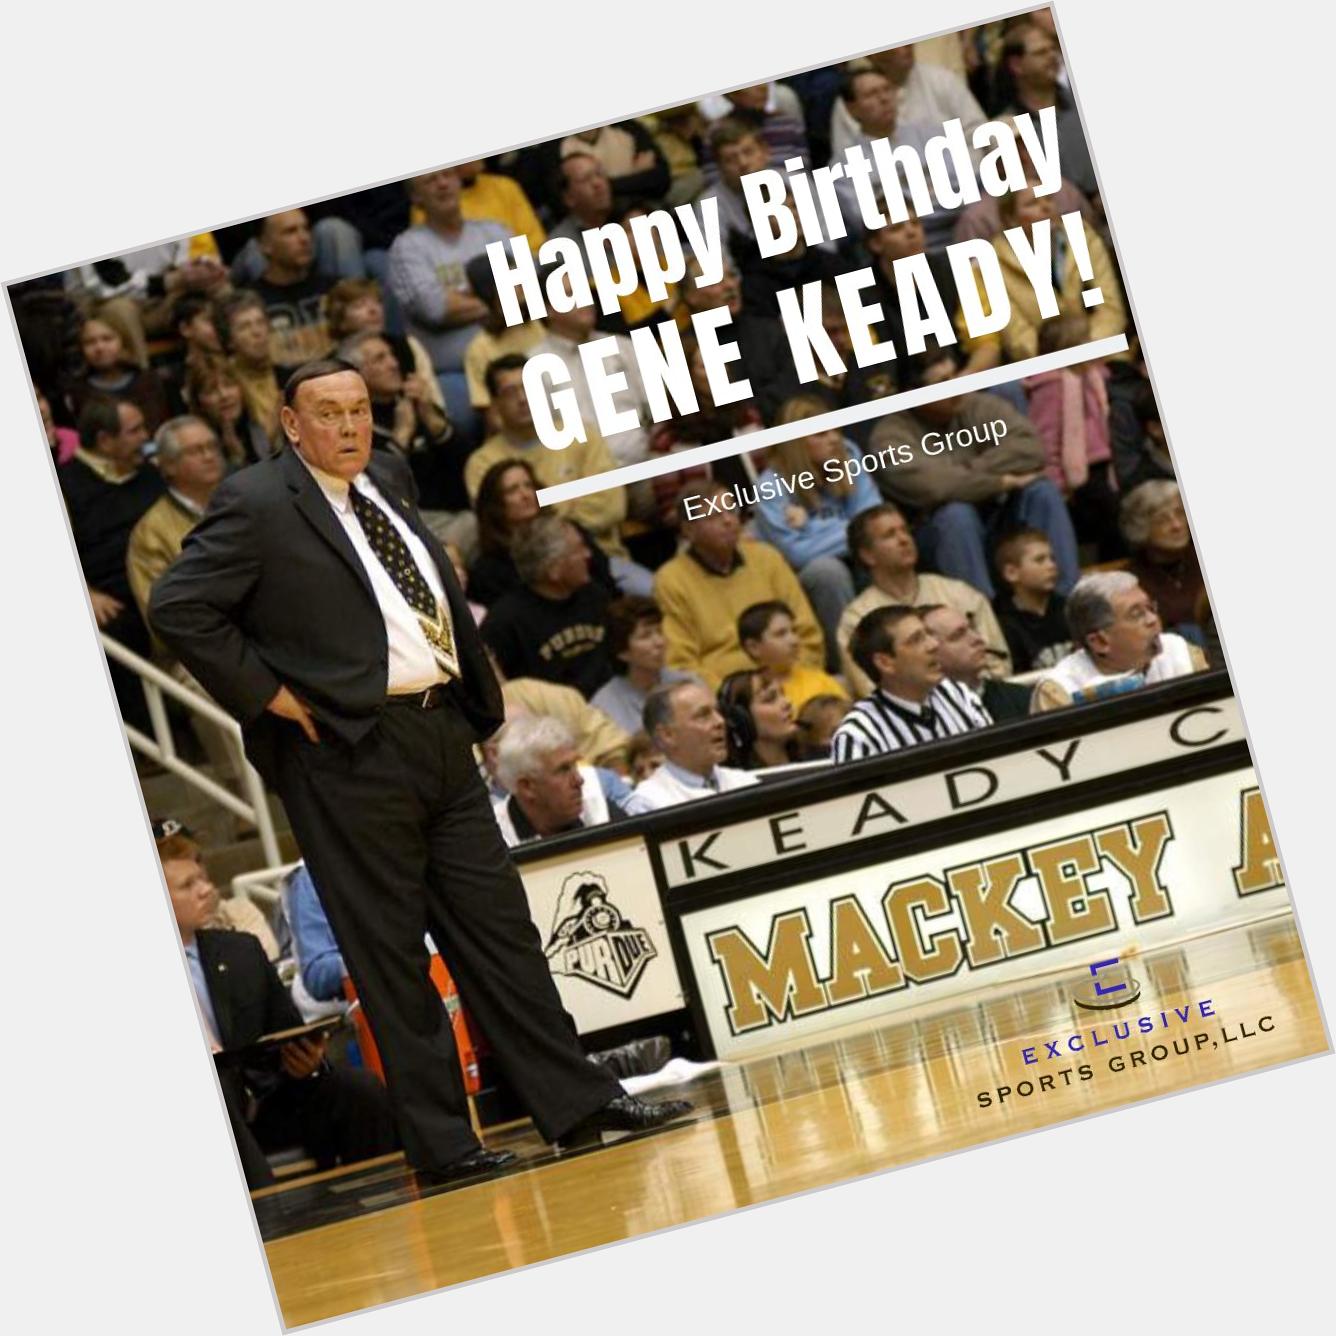 Happy Birthday to legend, Gene Keady!  